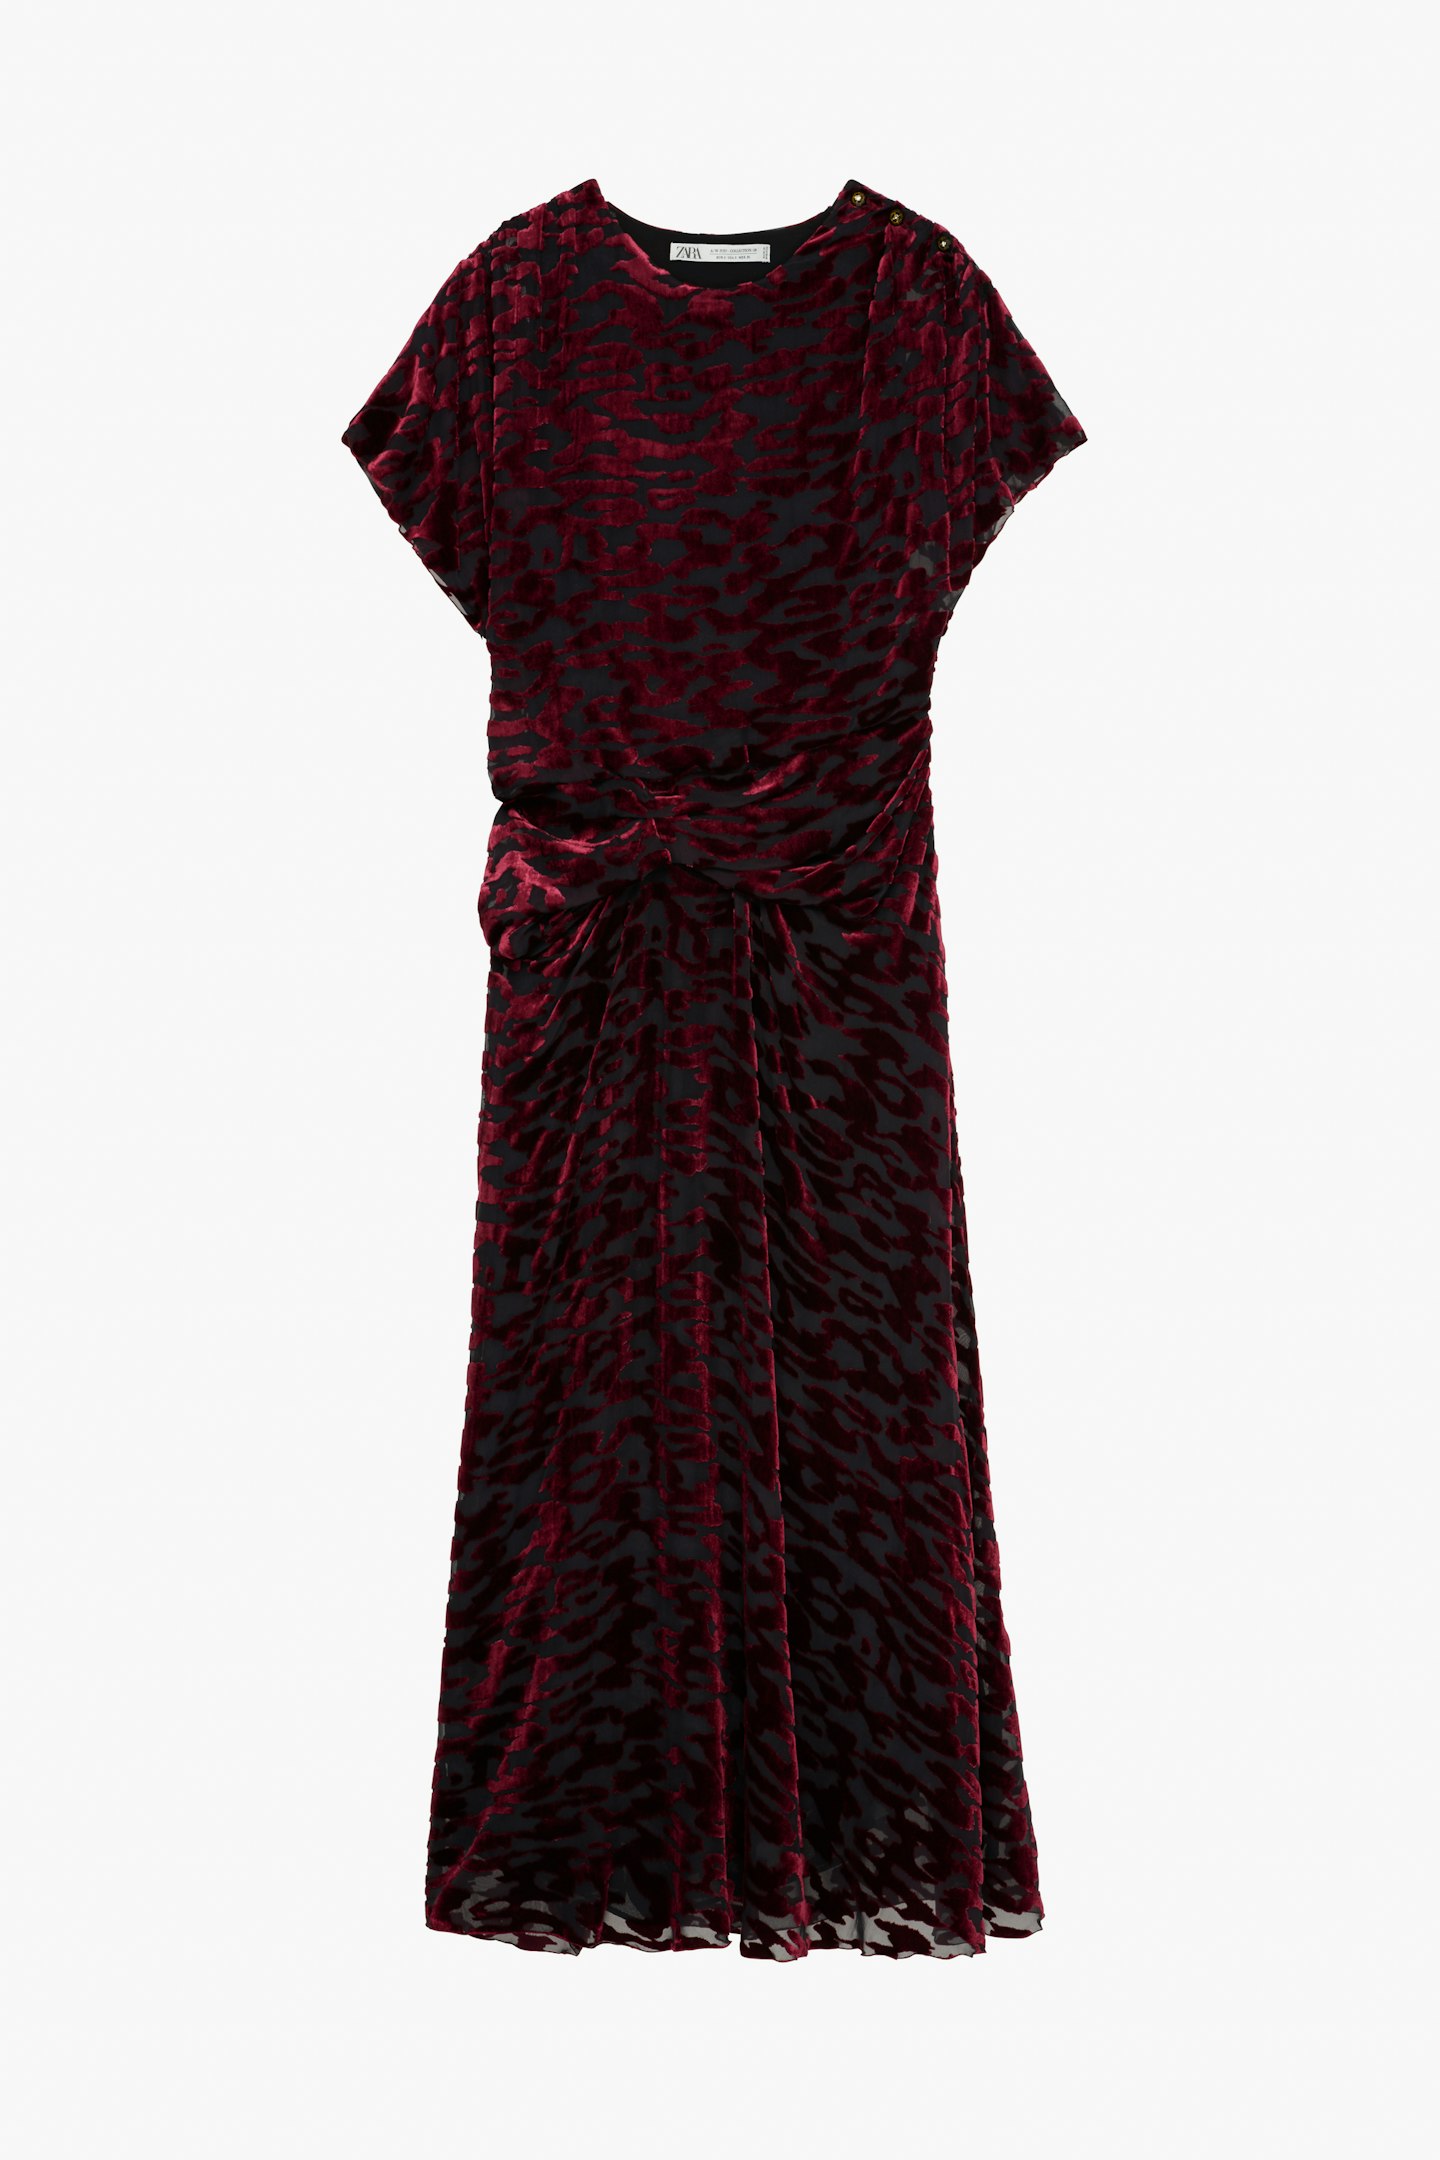 Limited Edition Draped Dress, £109